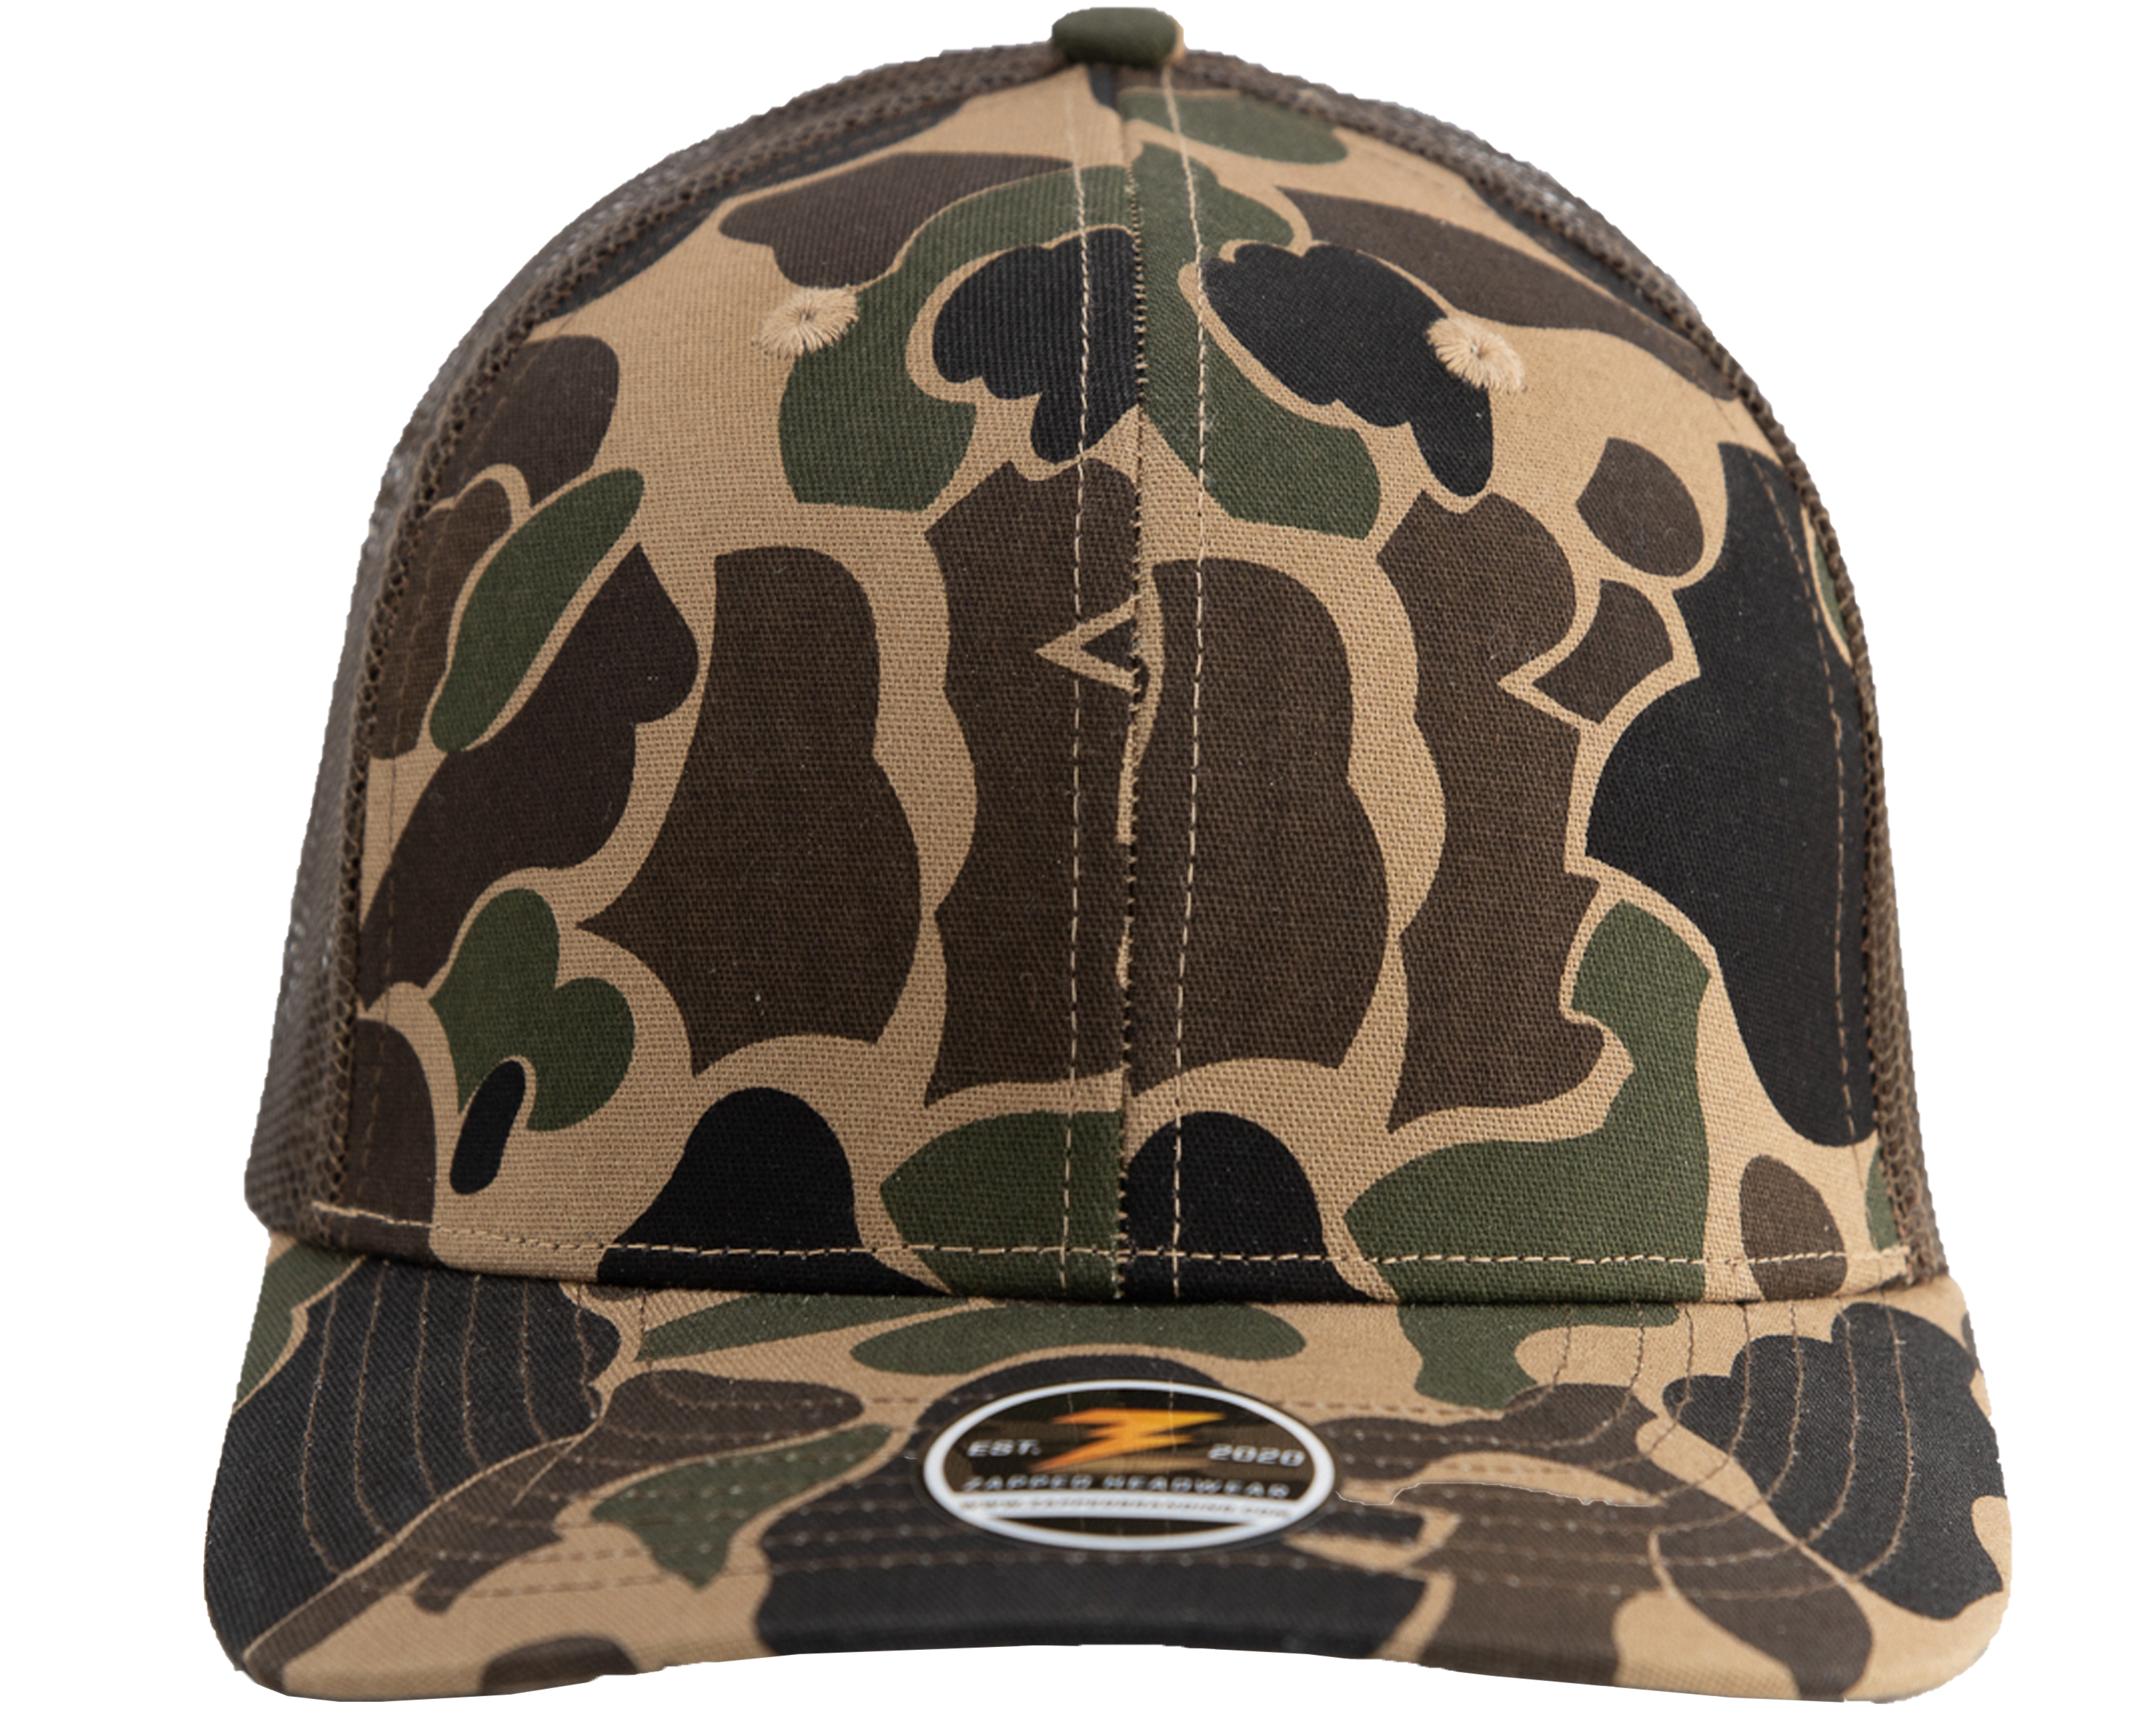 Warrior Camo- Old school camo- Duck camo- Snapback- hunting hats- custom hats- blank hats - leather patch hats